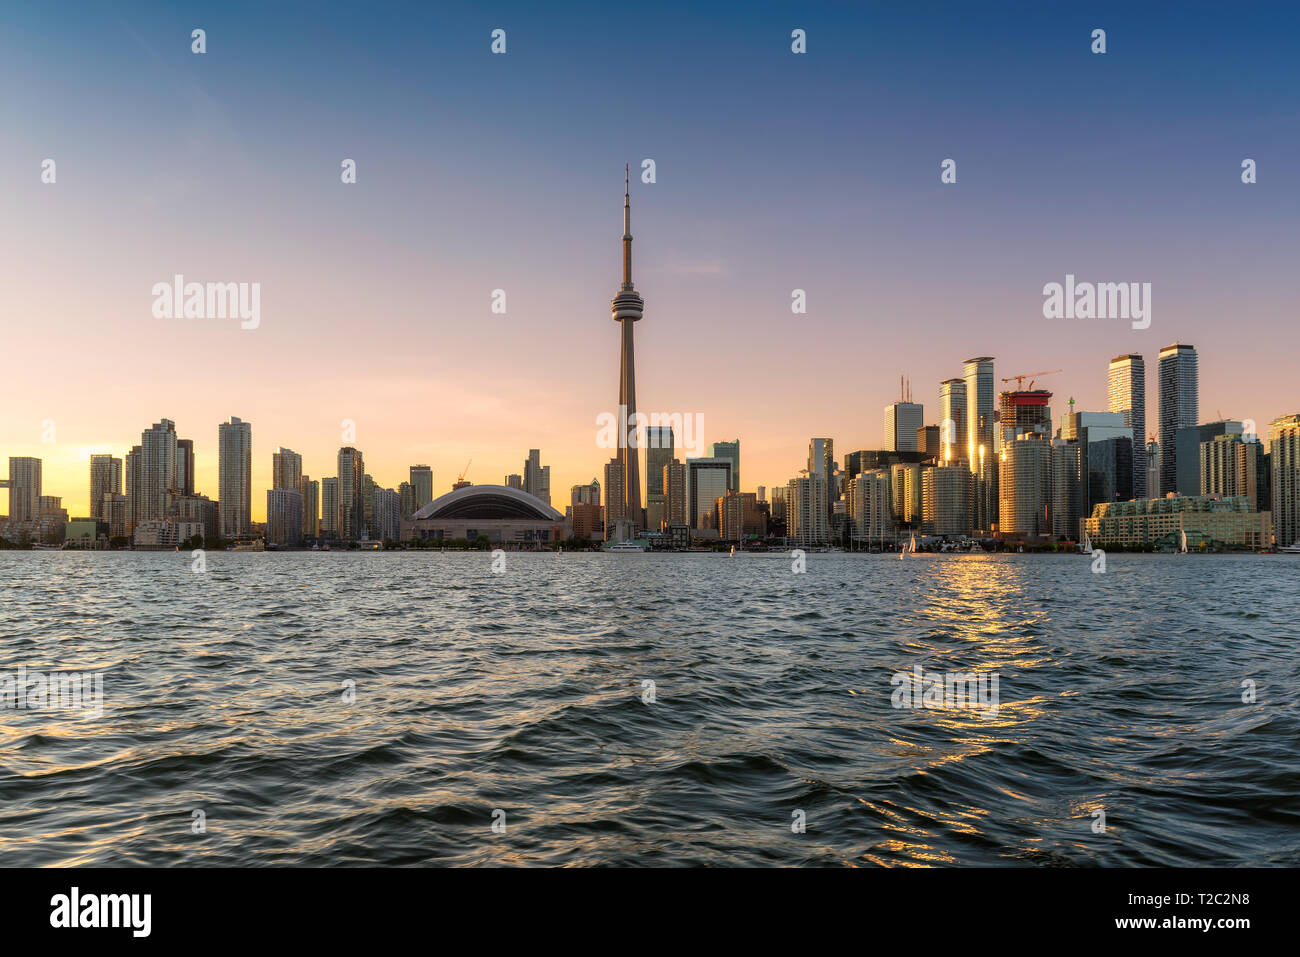 Schöne Toronto City Skyline im Sonnenuntergang - Toronto, Ontario, Kanada. Stockfoto